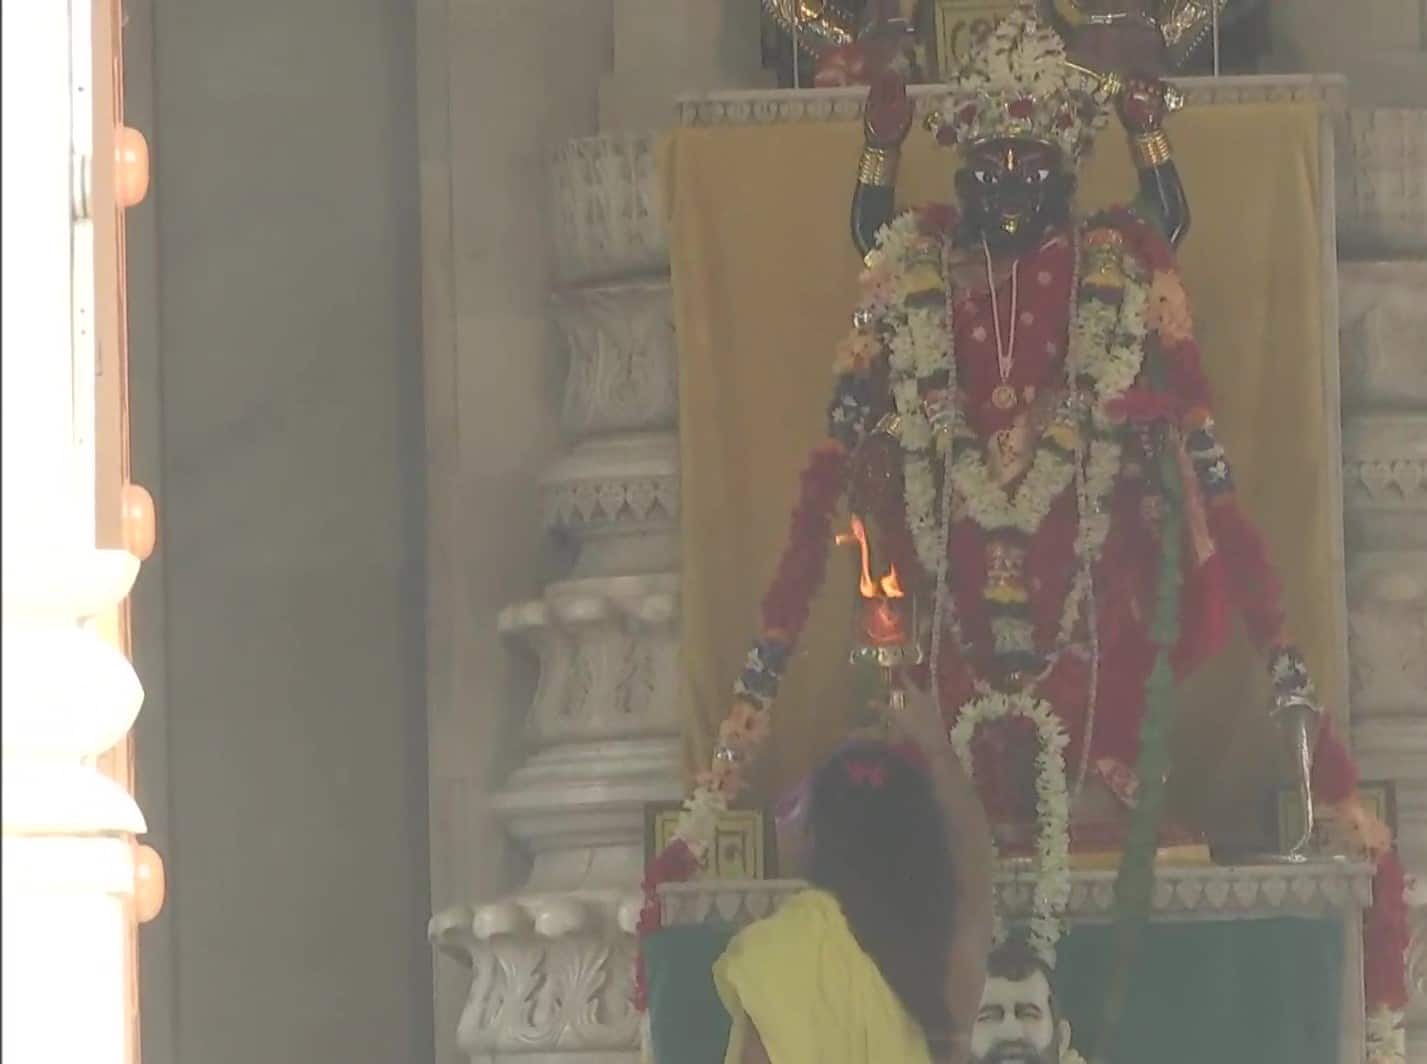 Prayers offered to goddess Kali